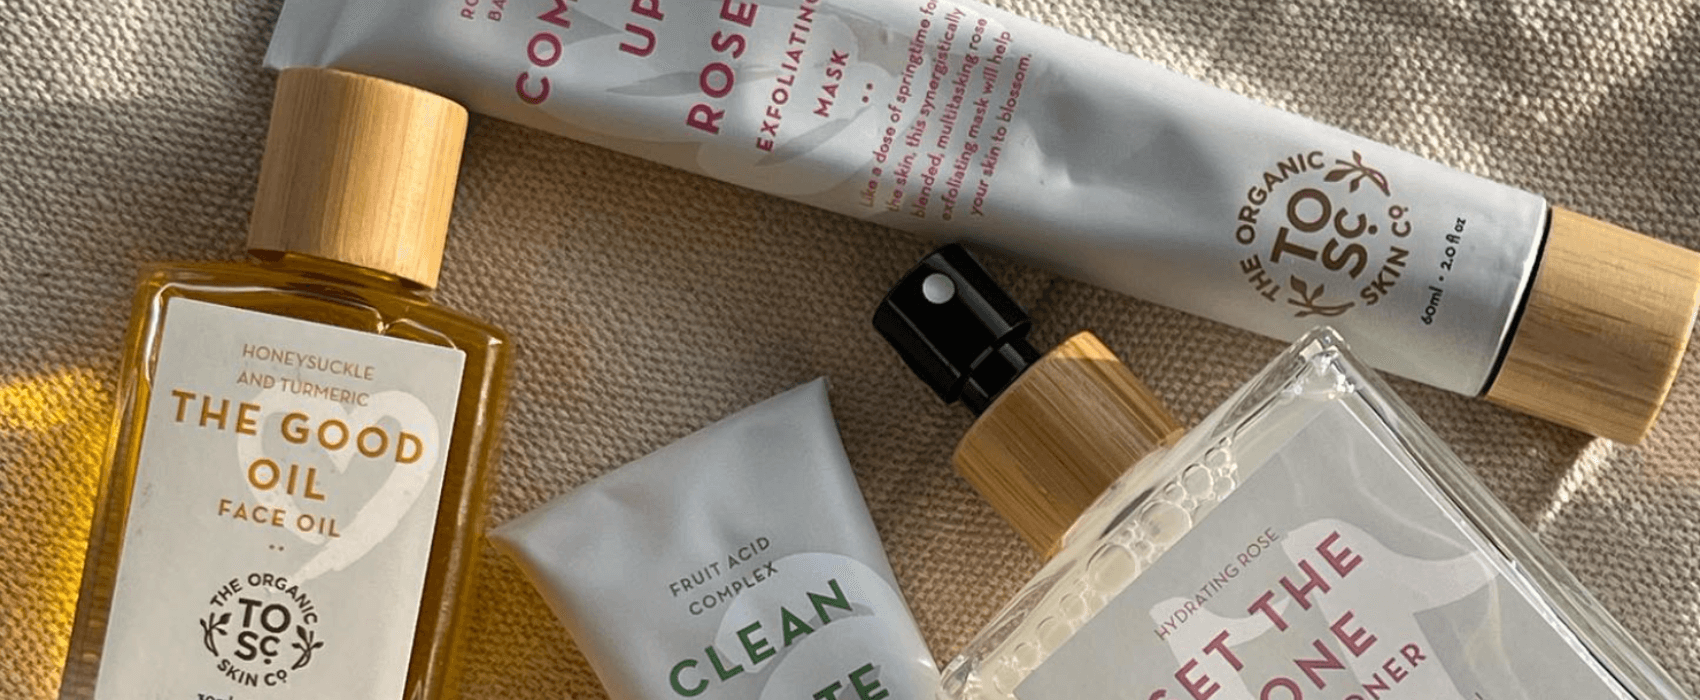 Blog - Introducing The Organic Skin Co